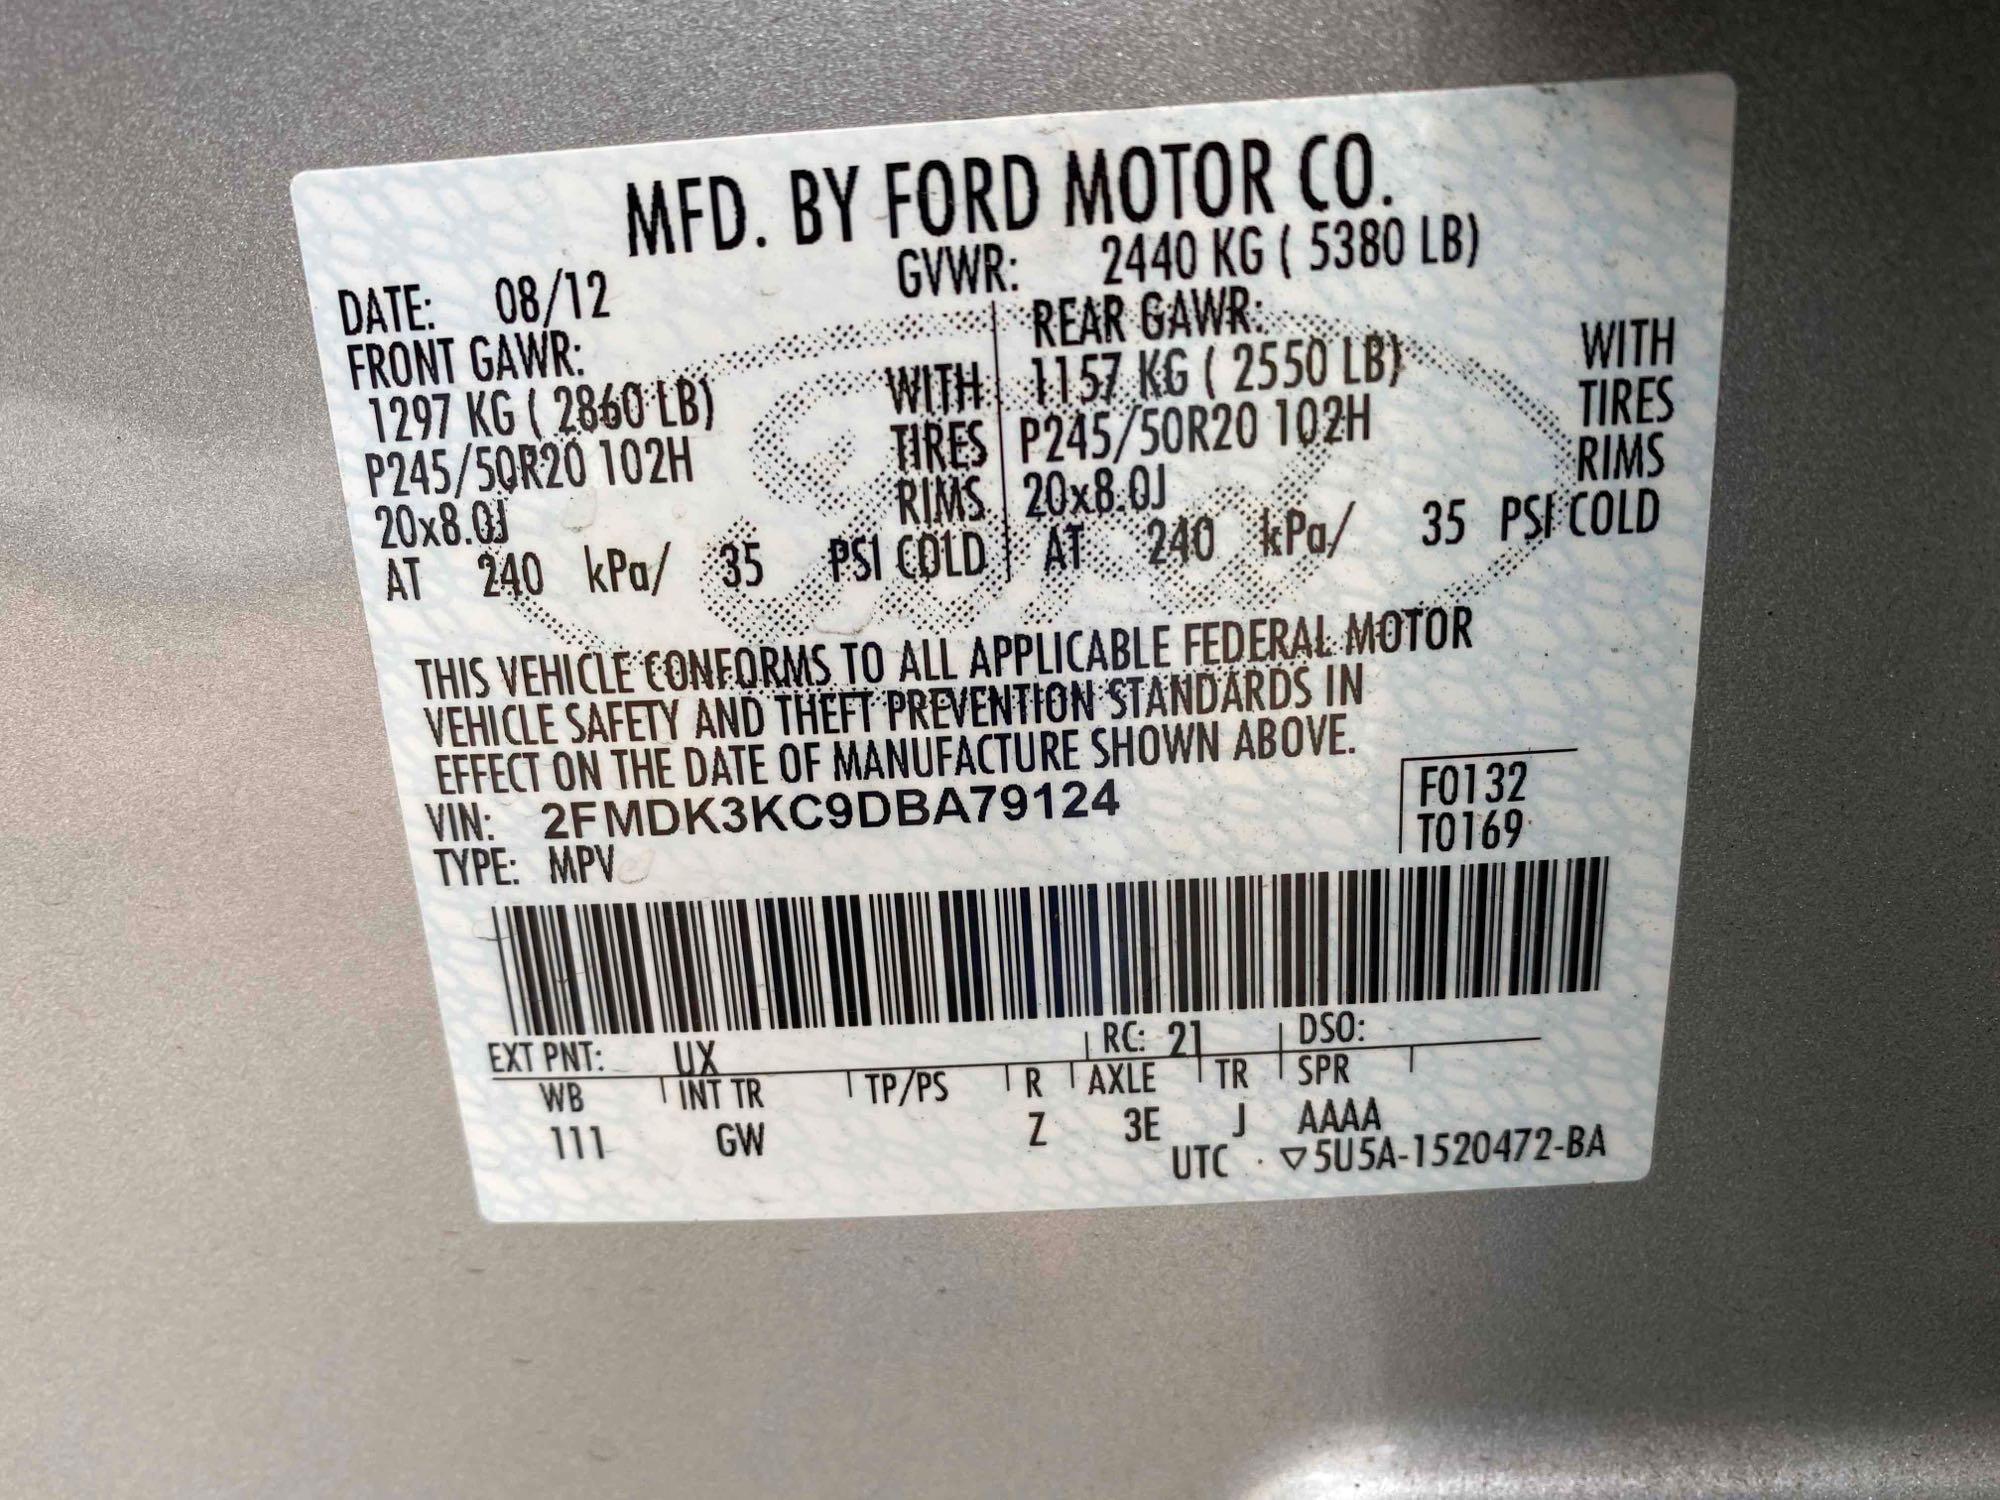 2013 Ford Edge (MPV), VIN # 2FMDK3KC9DBA79124